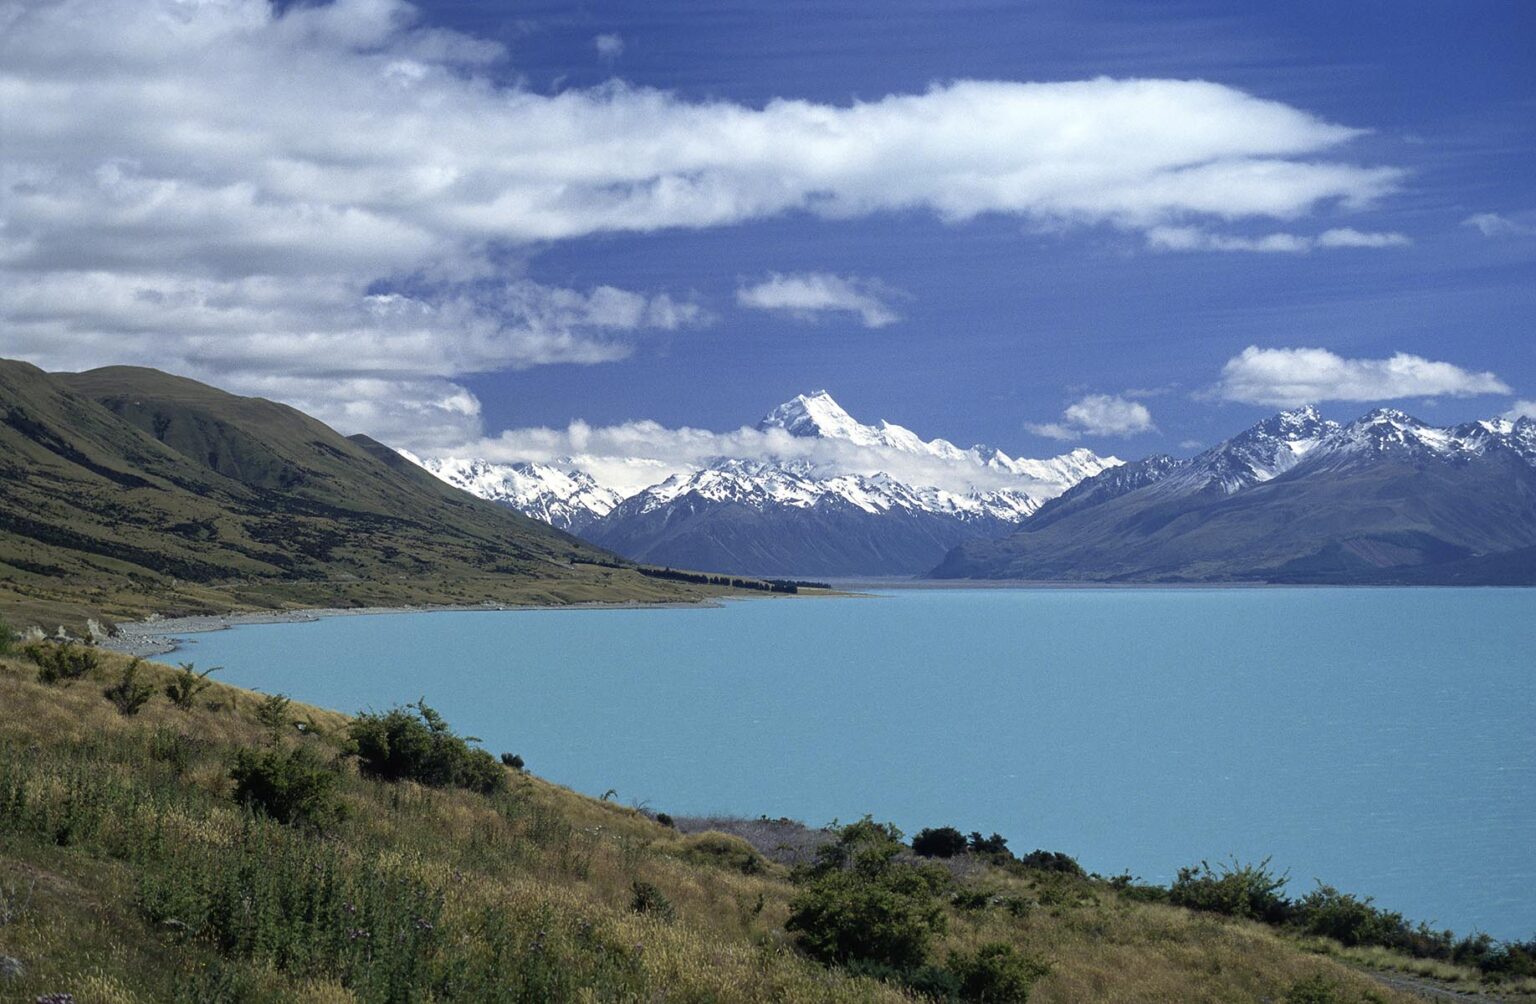 MT BLACKBURN & The turquoise waters of beautiful LAKE PUKAKI - SOUTH ISLAND, NEW ZEALAND